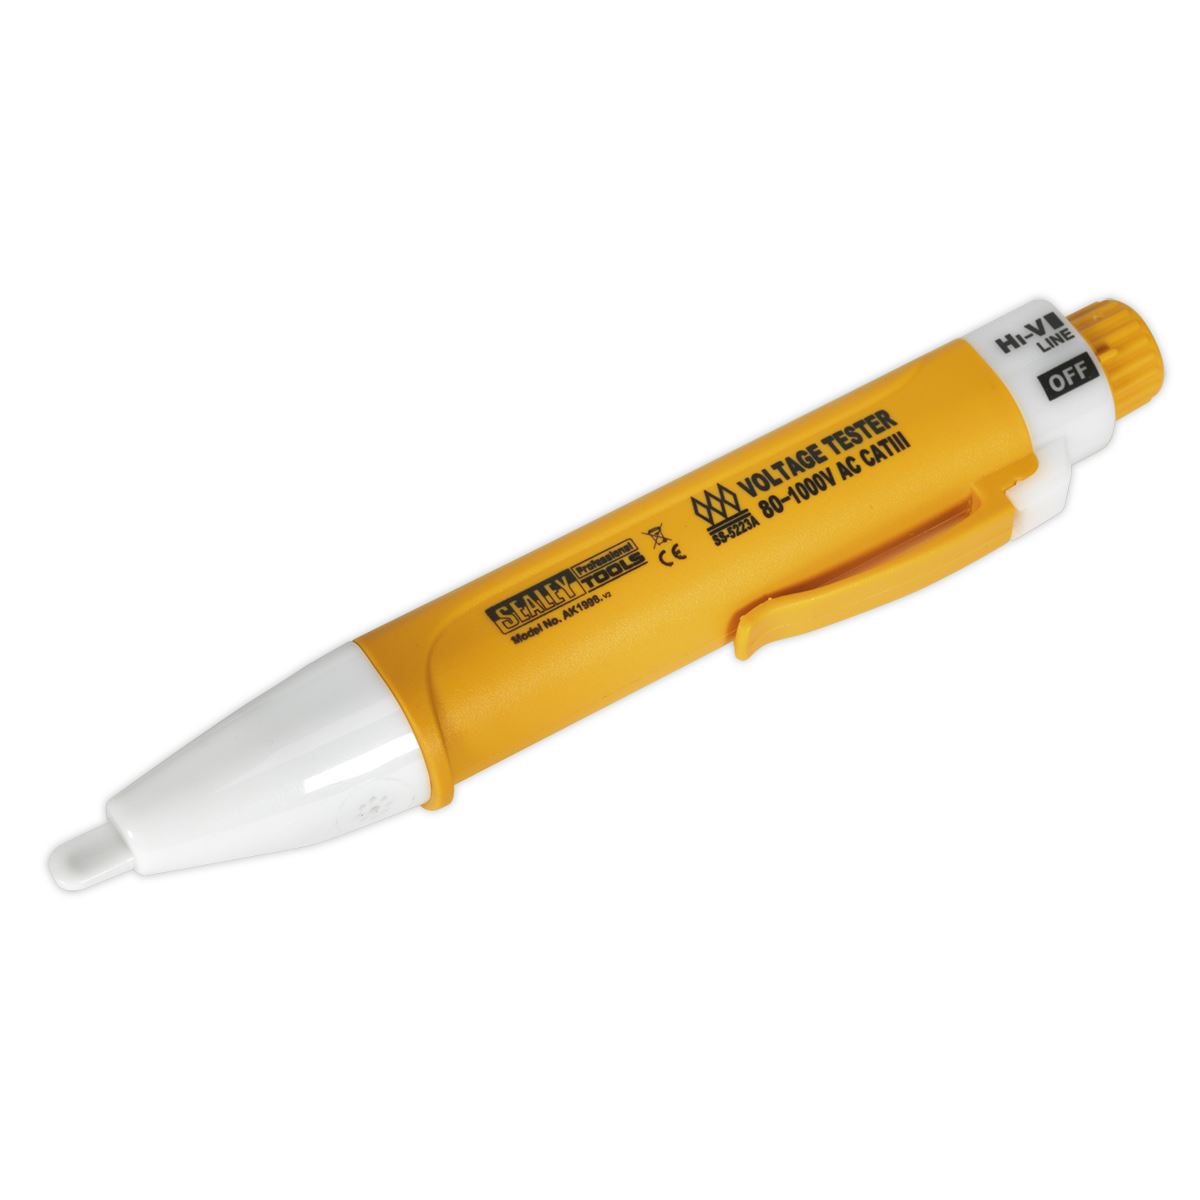 Sealey Non Contact Voltage Tester 80-1000v Electrical Pen Detector Audible Indication